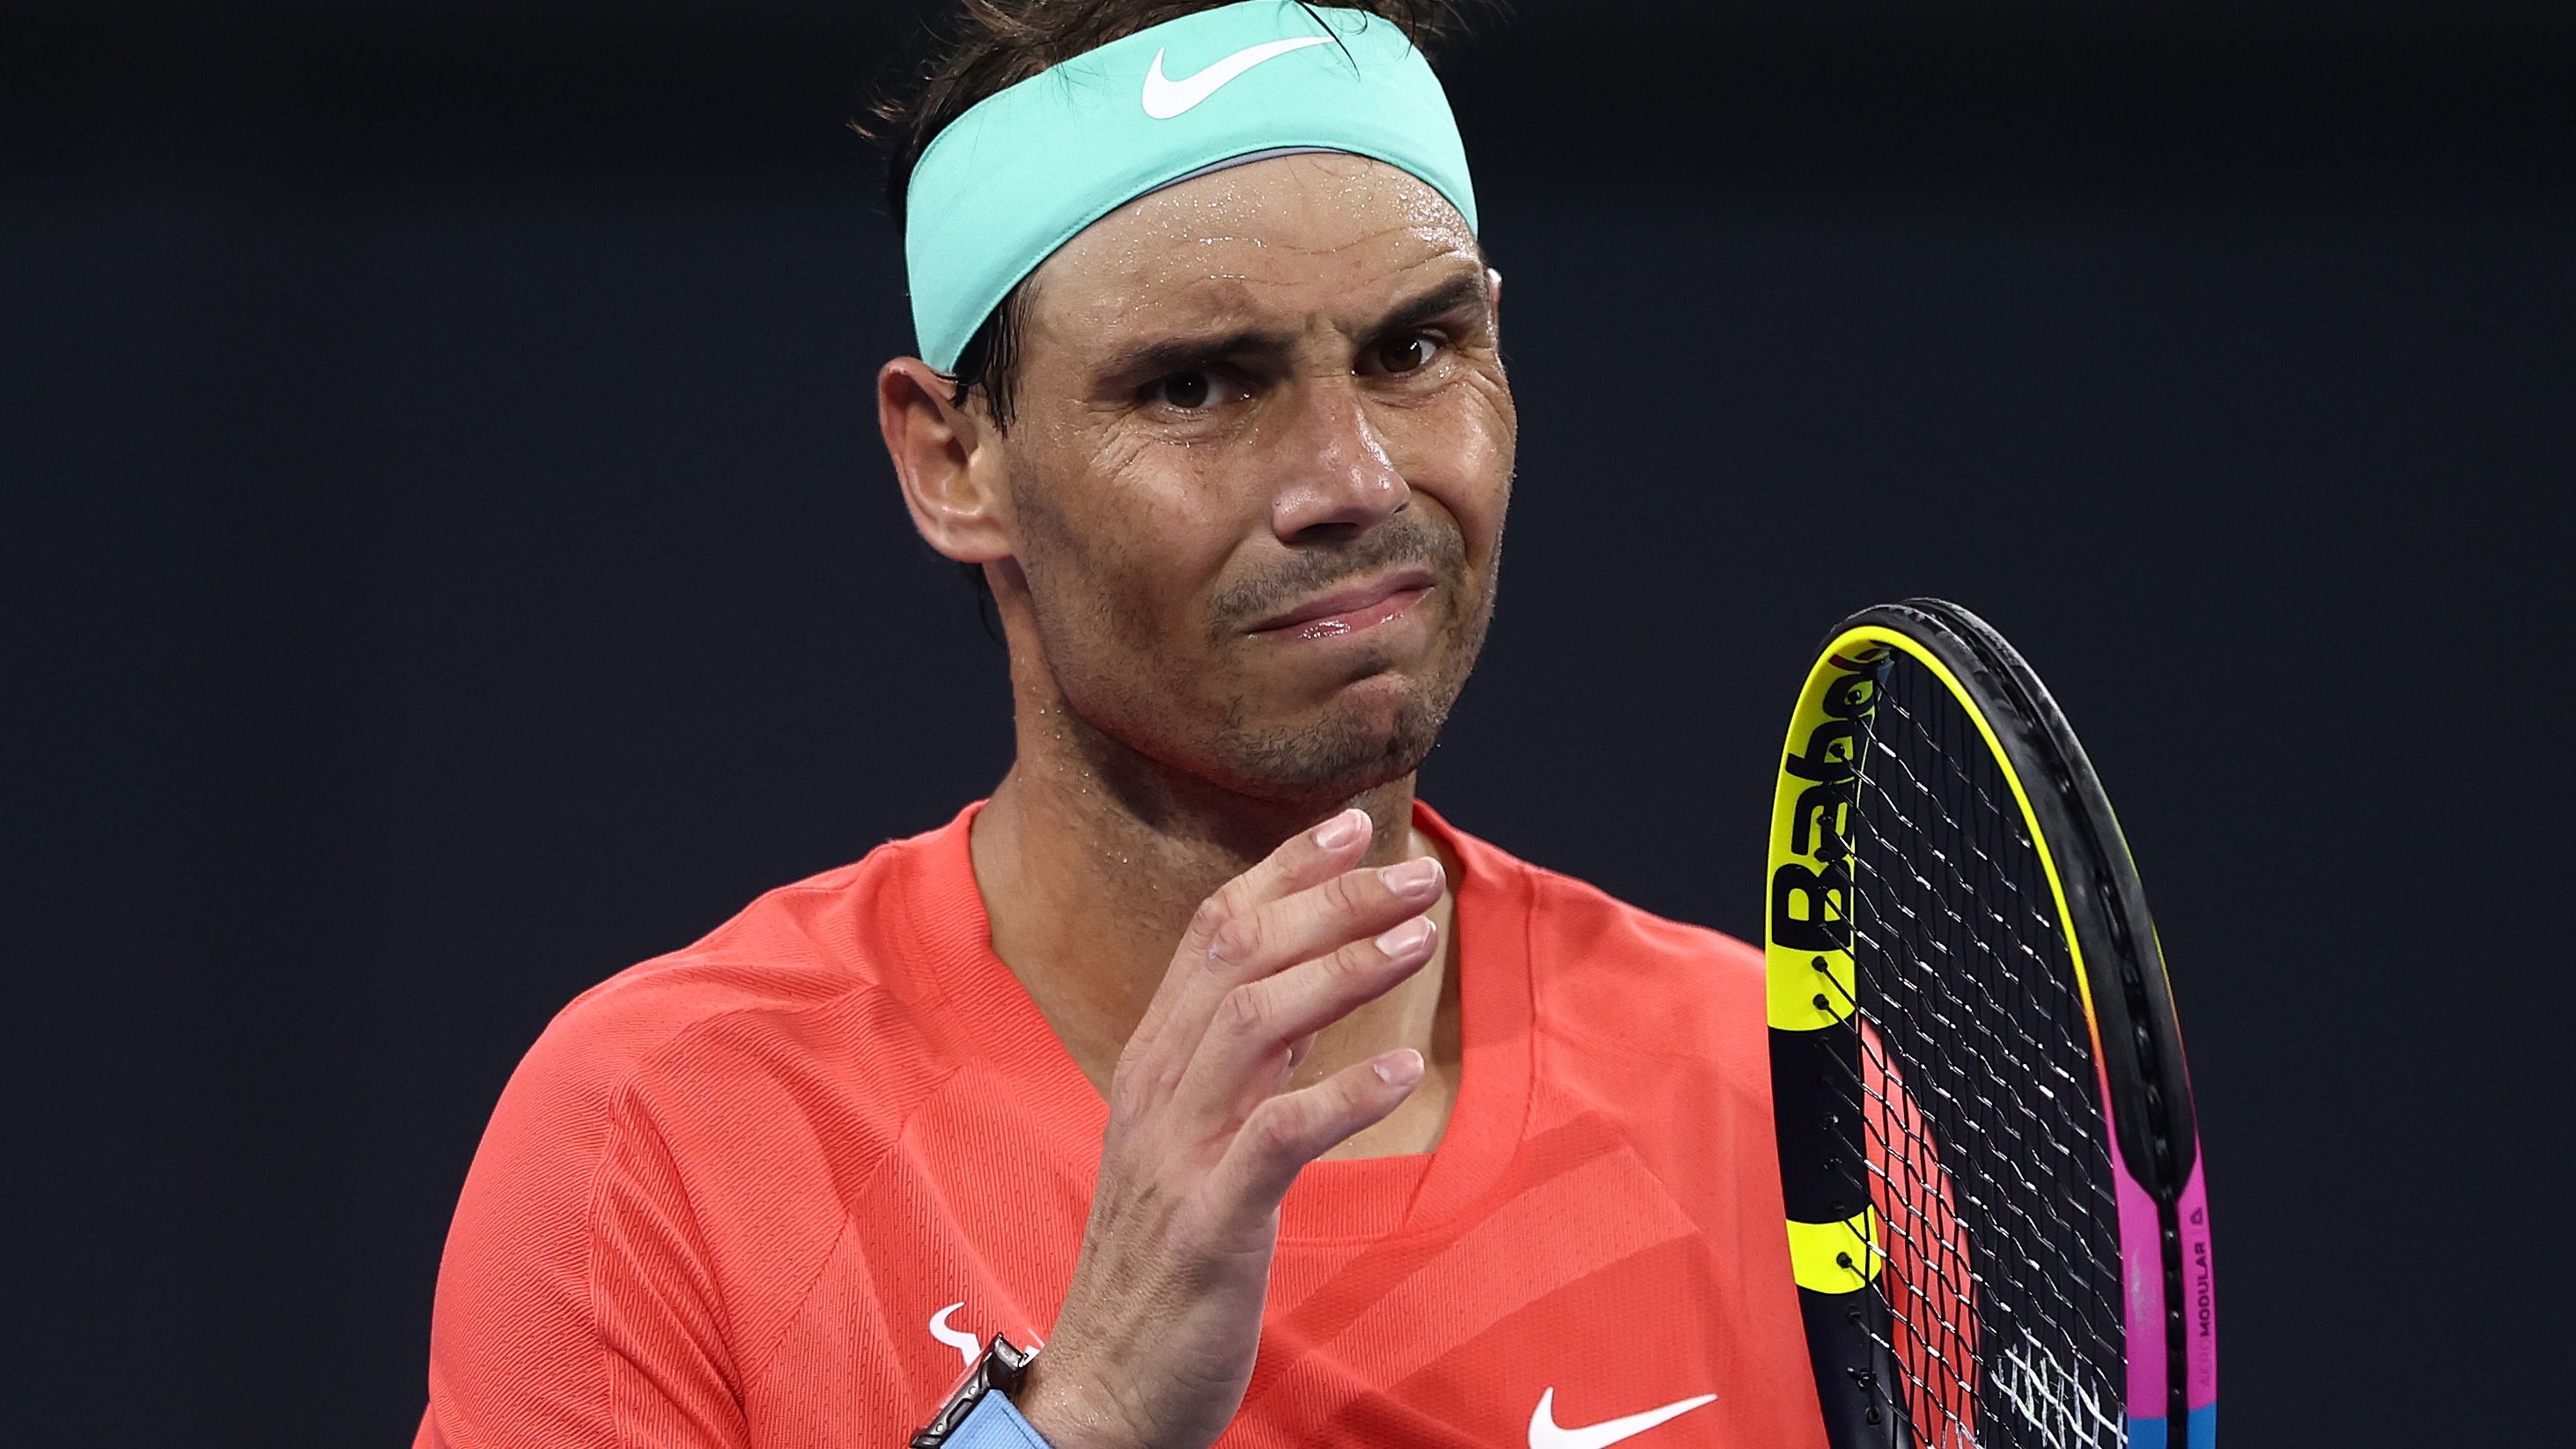 Rafael Nadal grimaces during his match against Jordan Thompson at the Brisbane International.